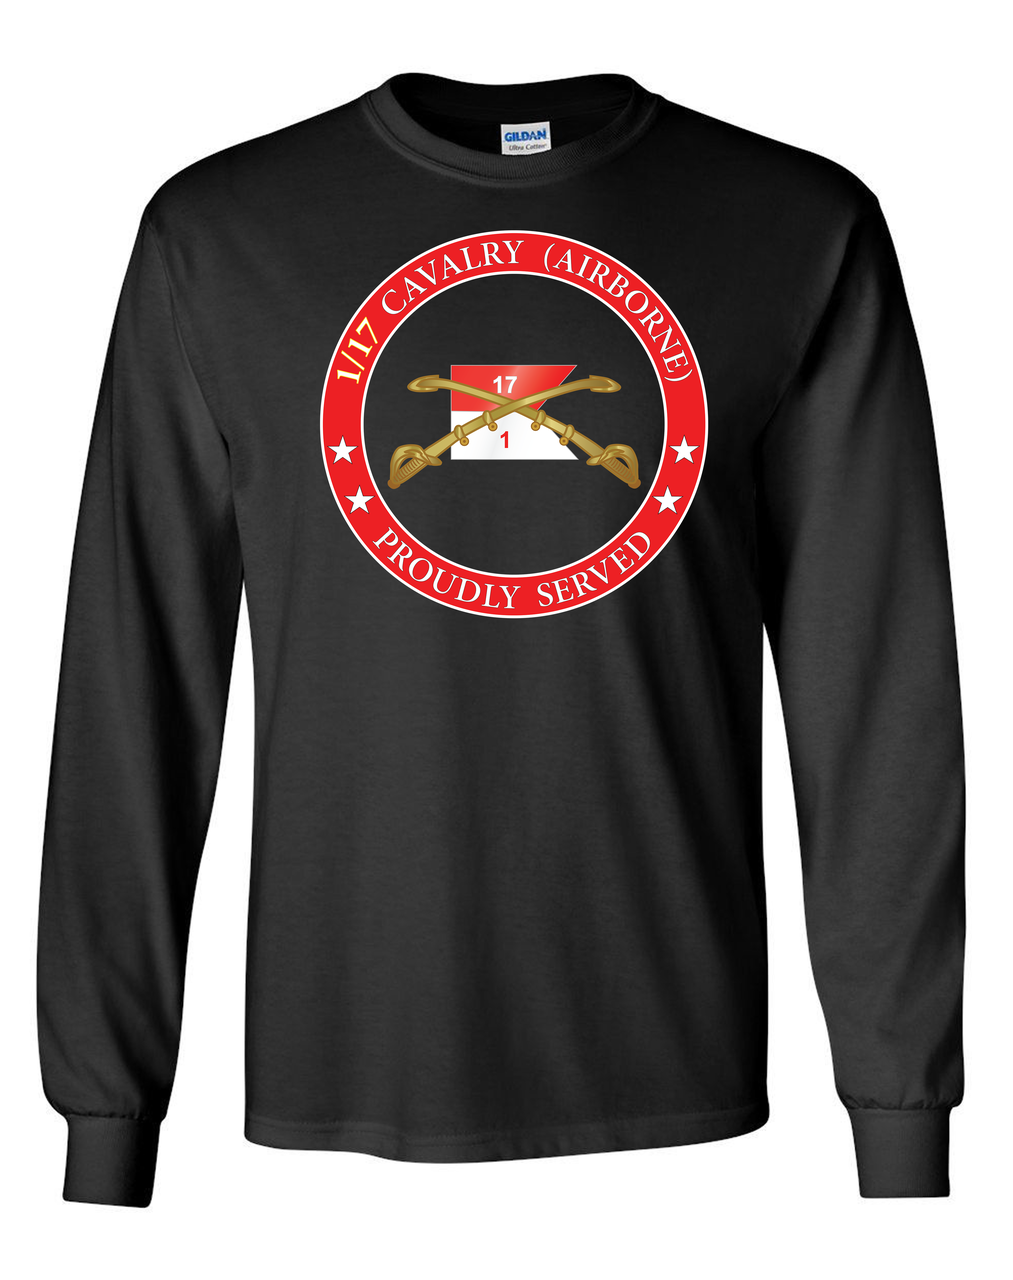 1/17th Cavalry Regiment (Airborne) Long-Sleeve Cotton T-Shirt